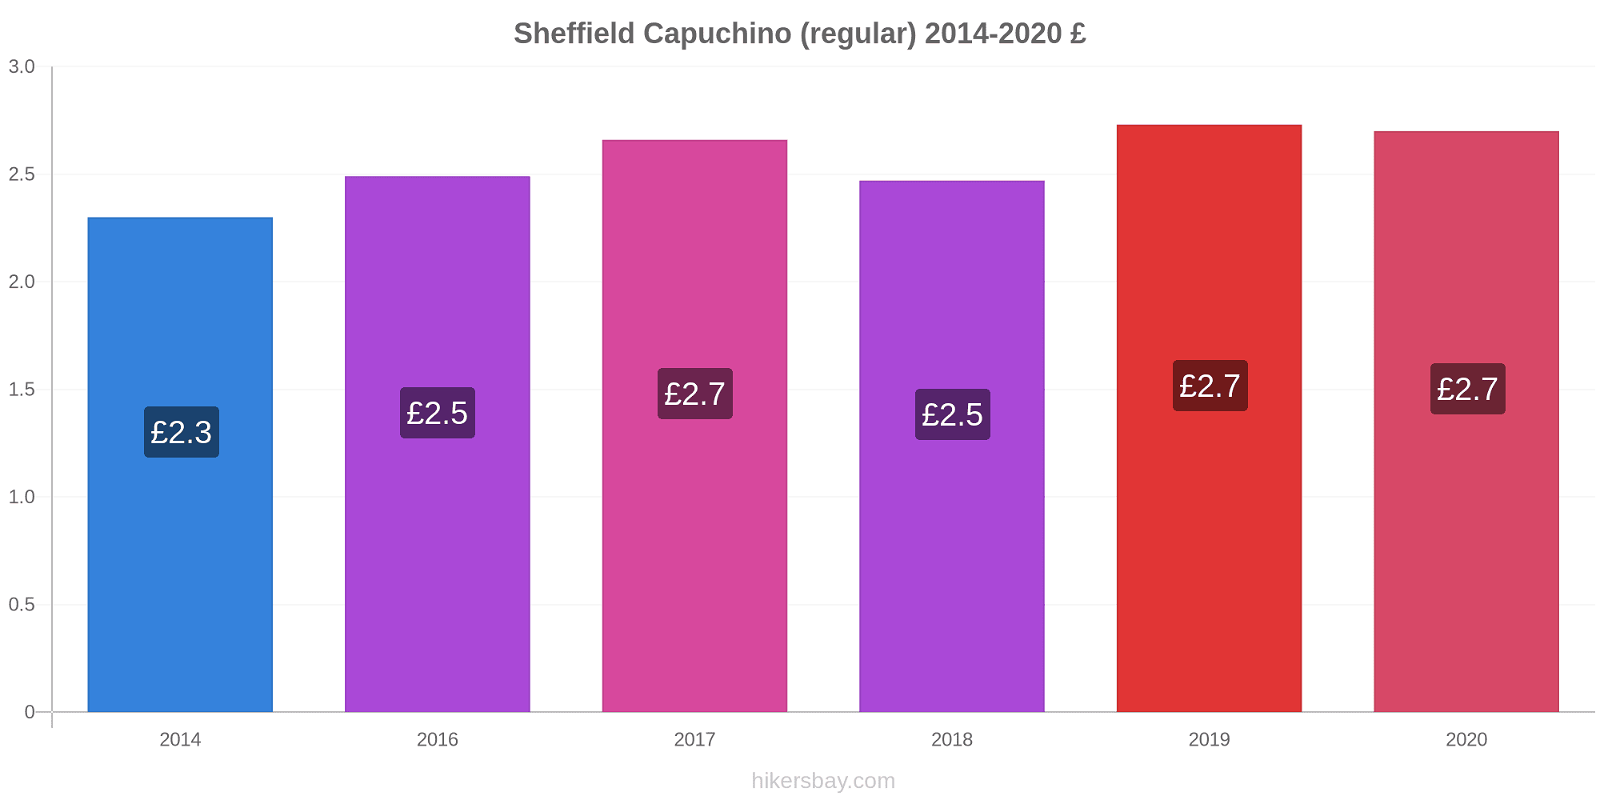 Sheffield cambios de precios Capuchino (regular) hikersbay.com